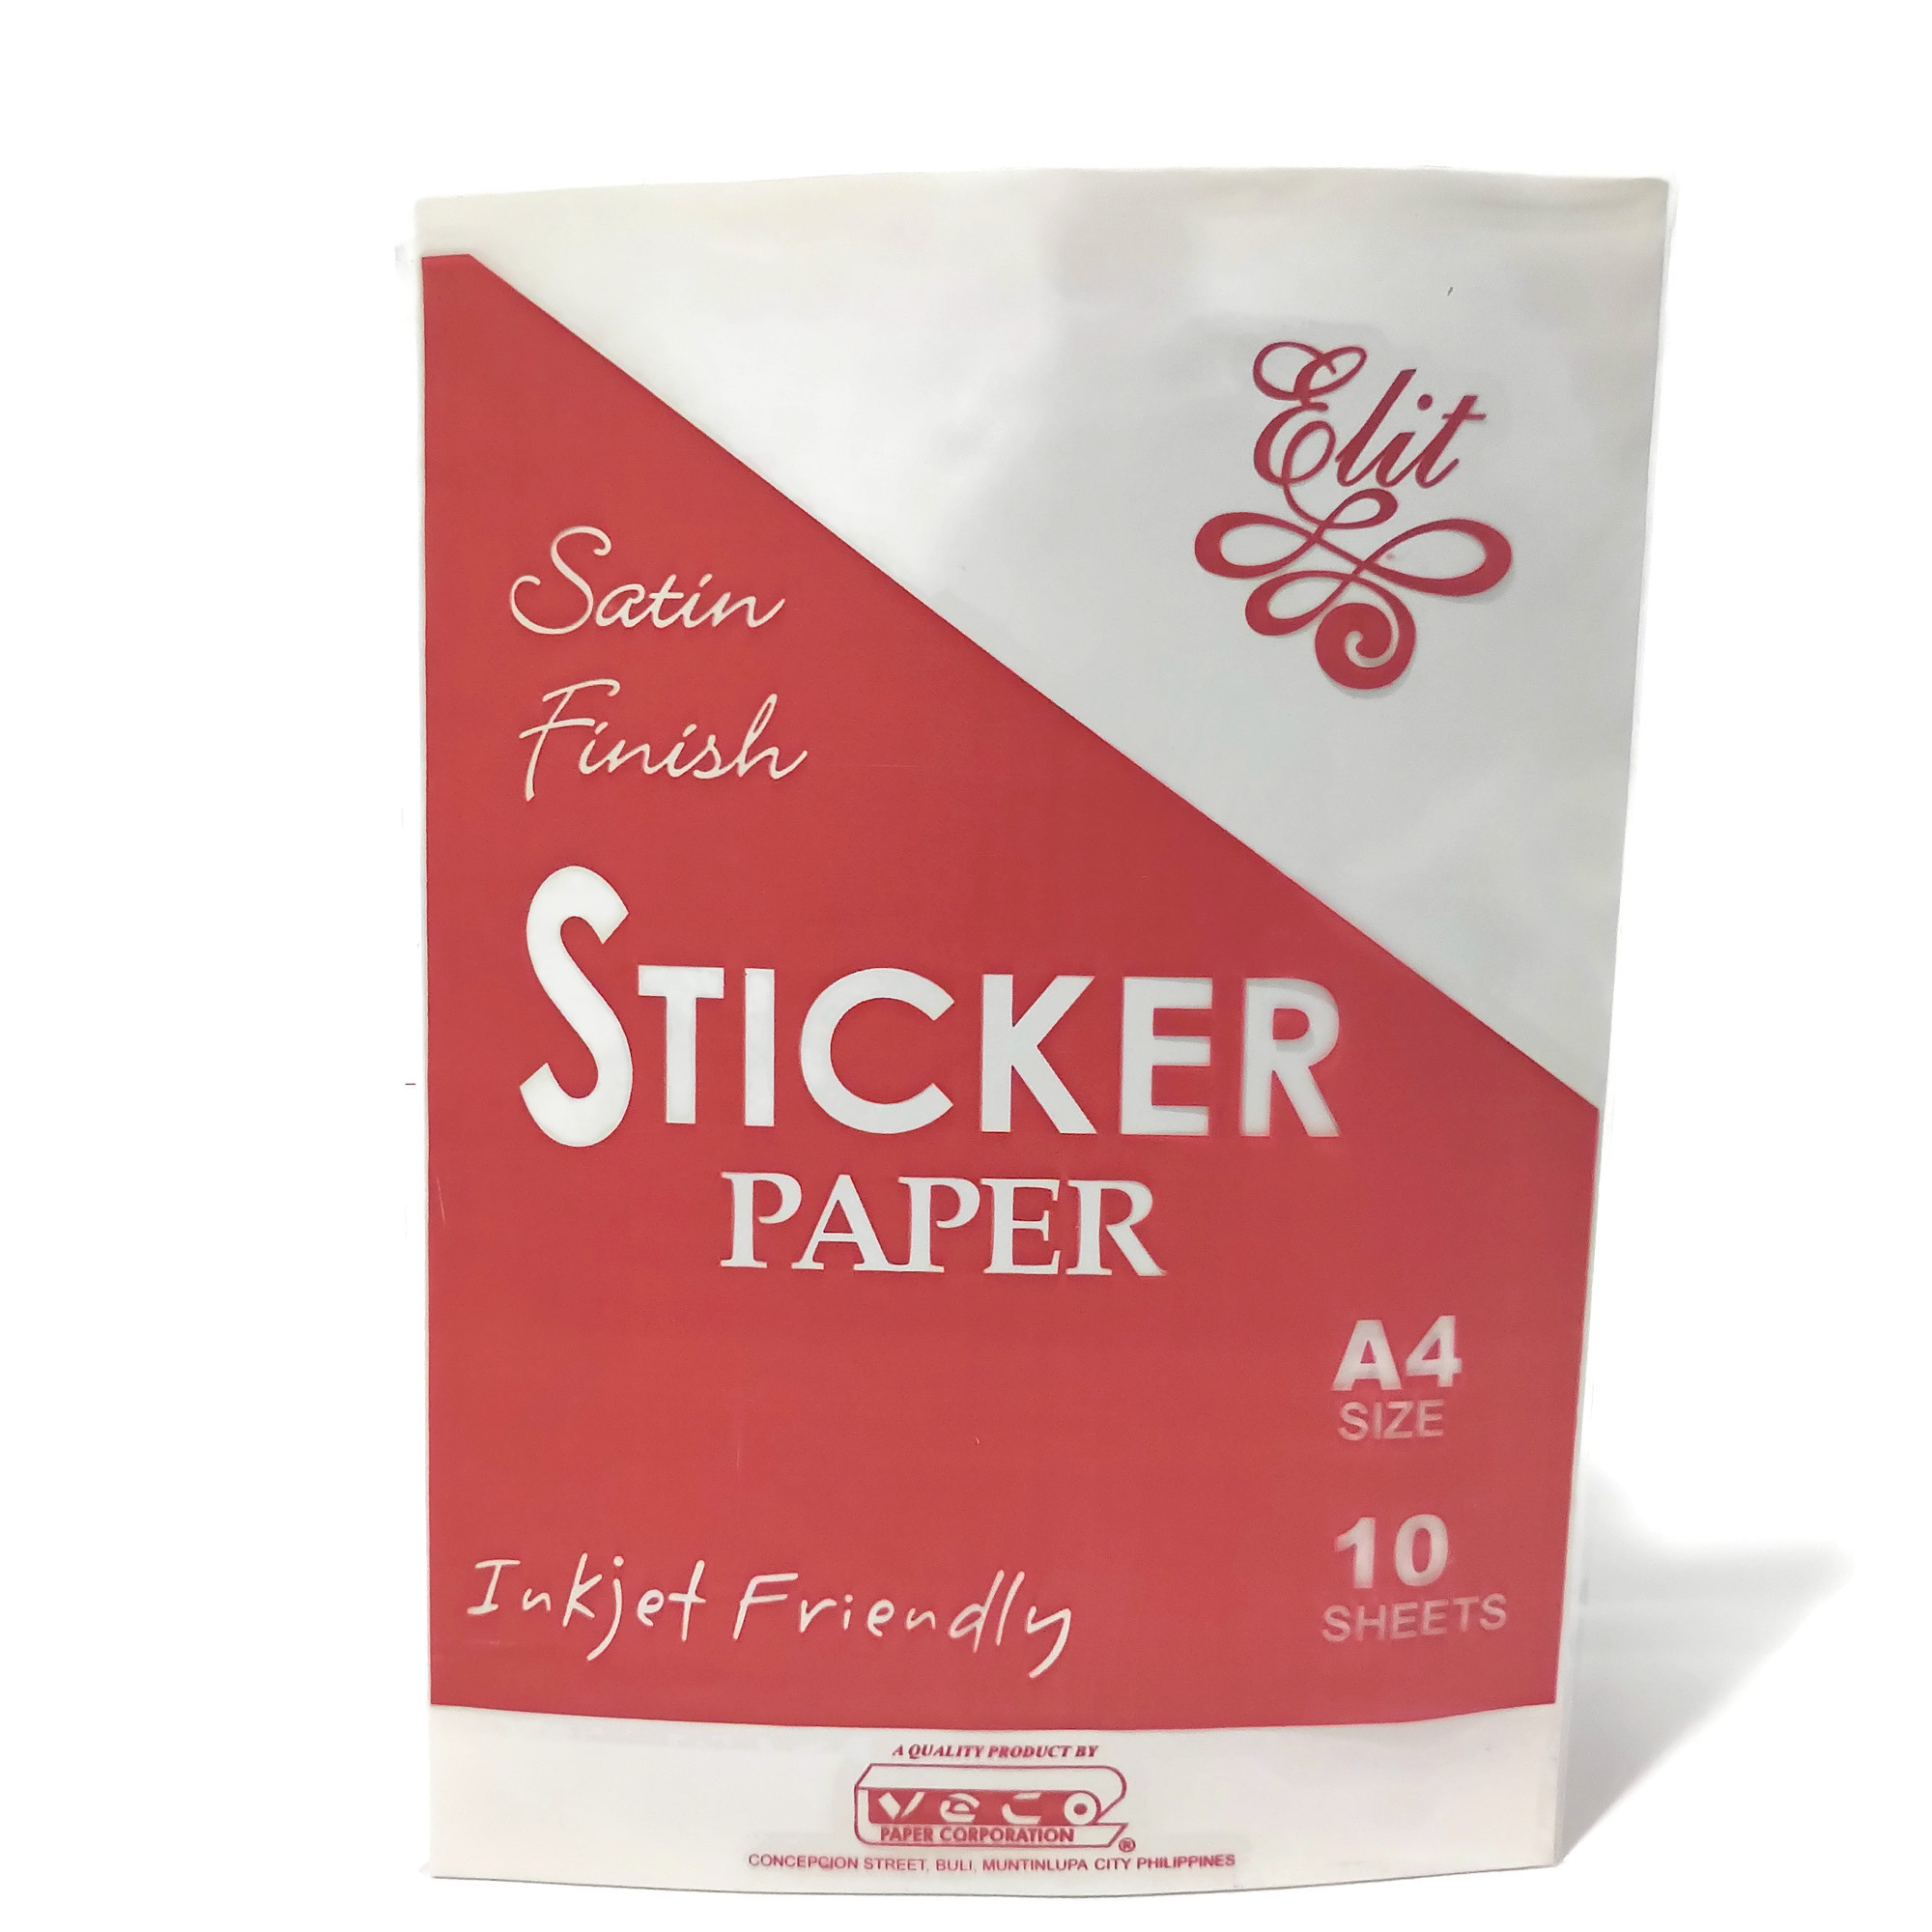 Sticker Paper - Veco Satin Finish - Supplies 24/7 Delivery